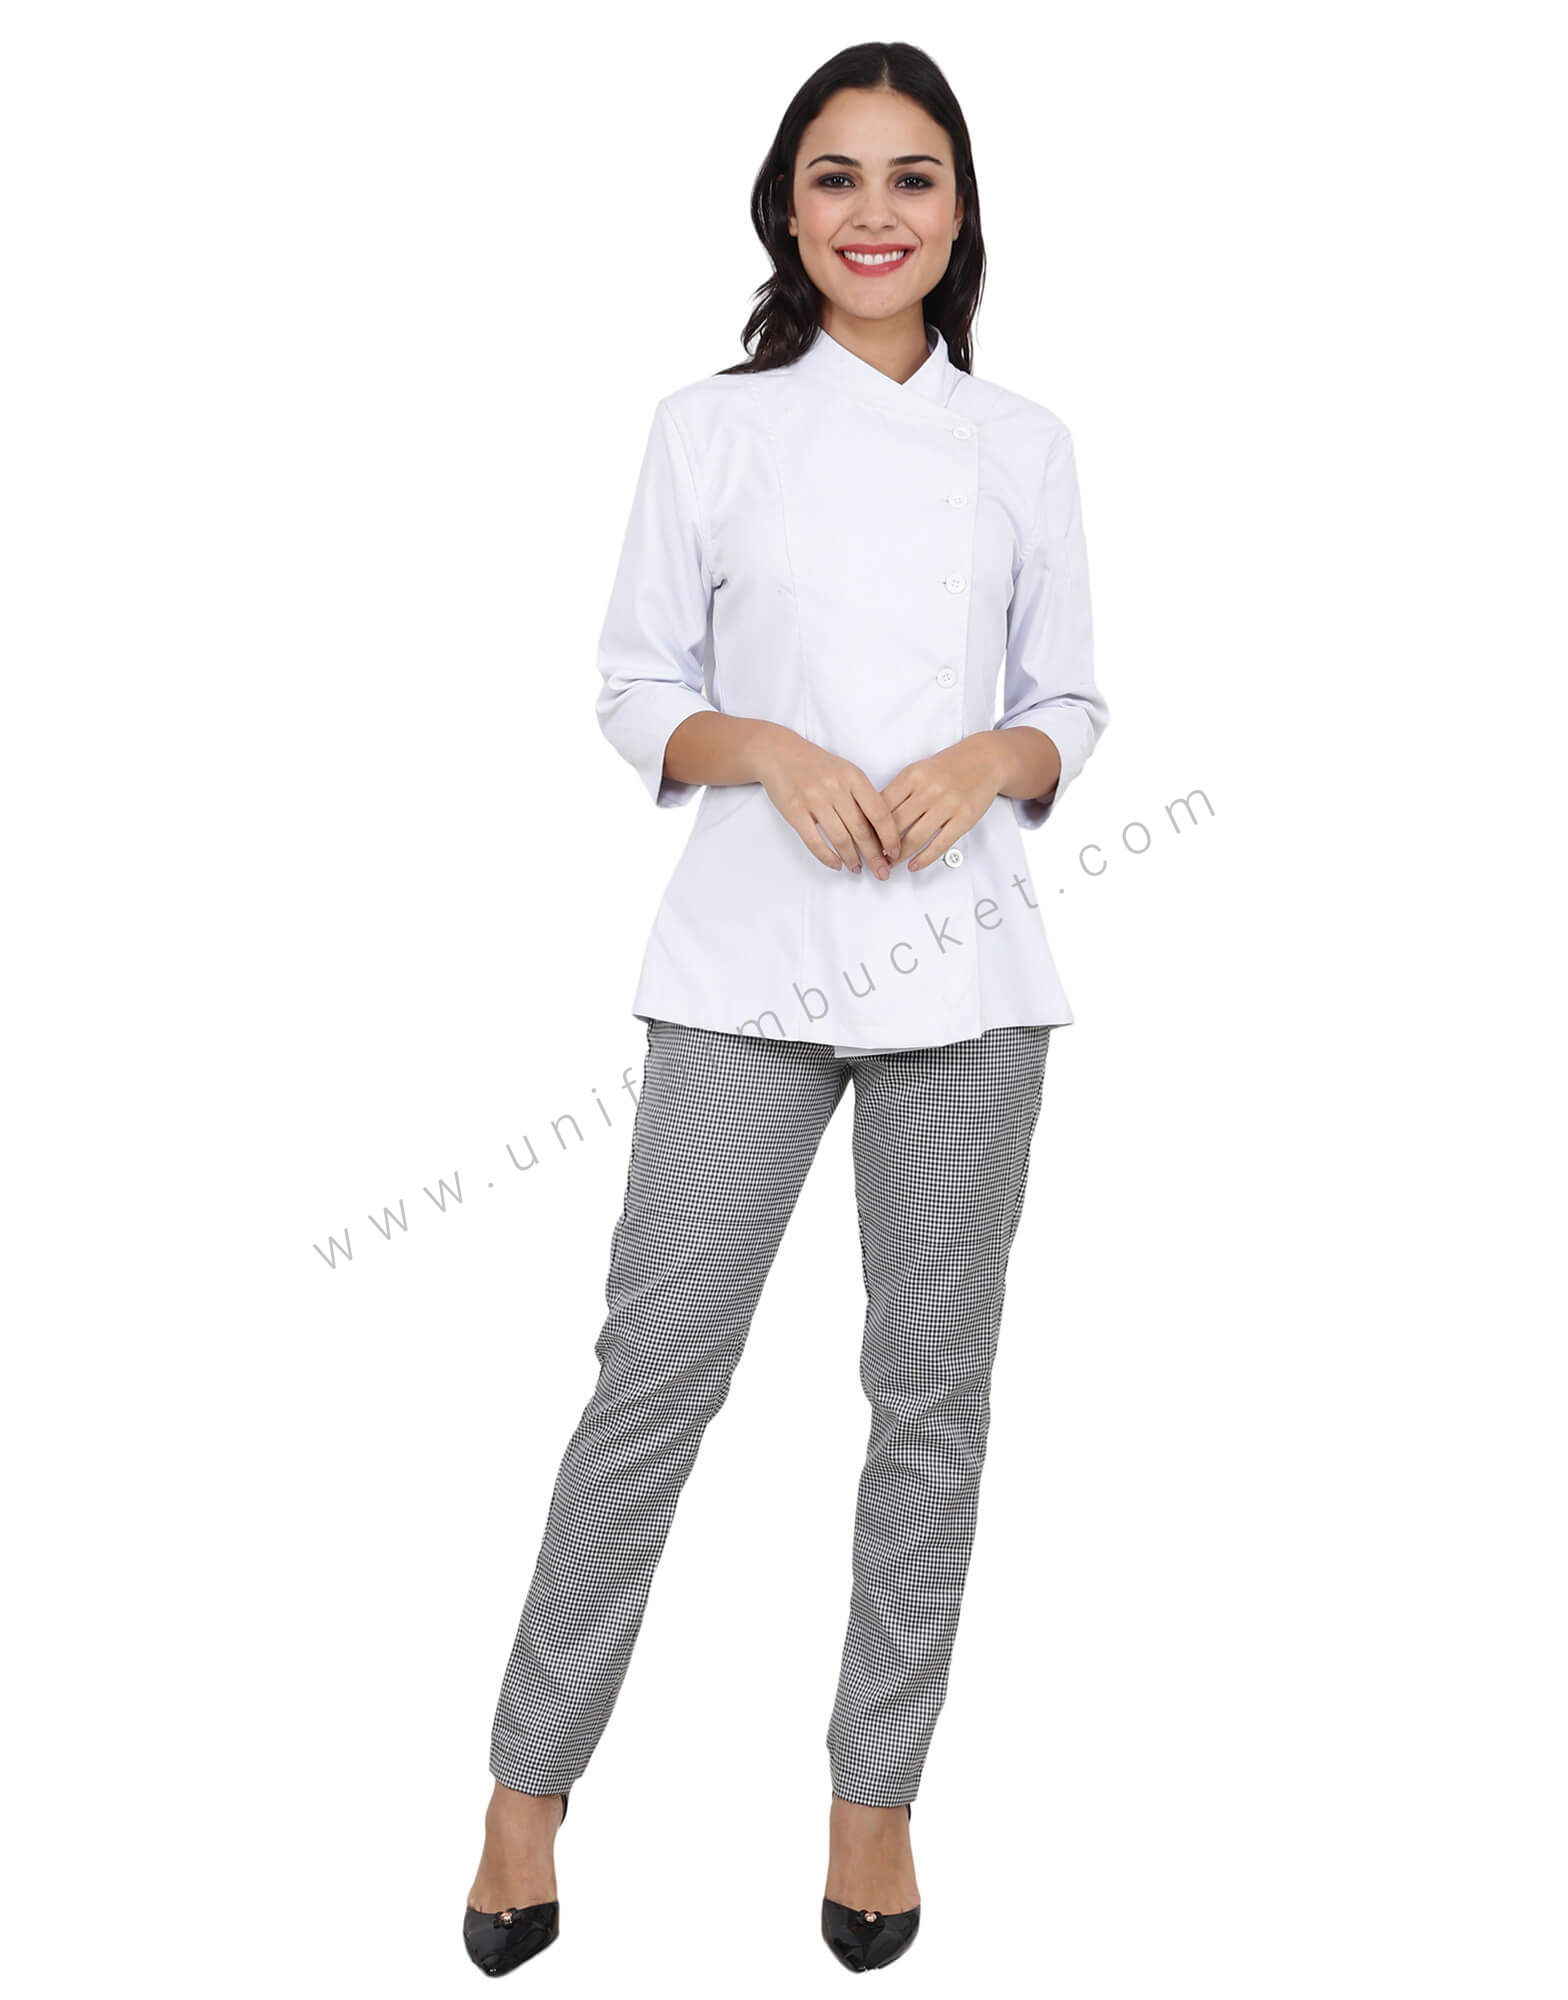 Beige Colored Linen Look Trousers  Intermod Workwear